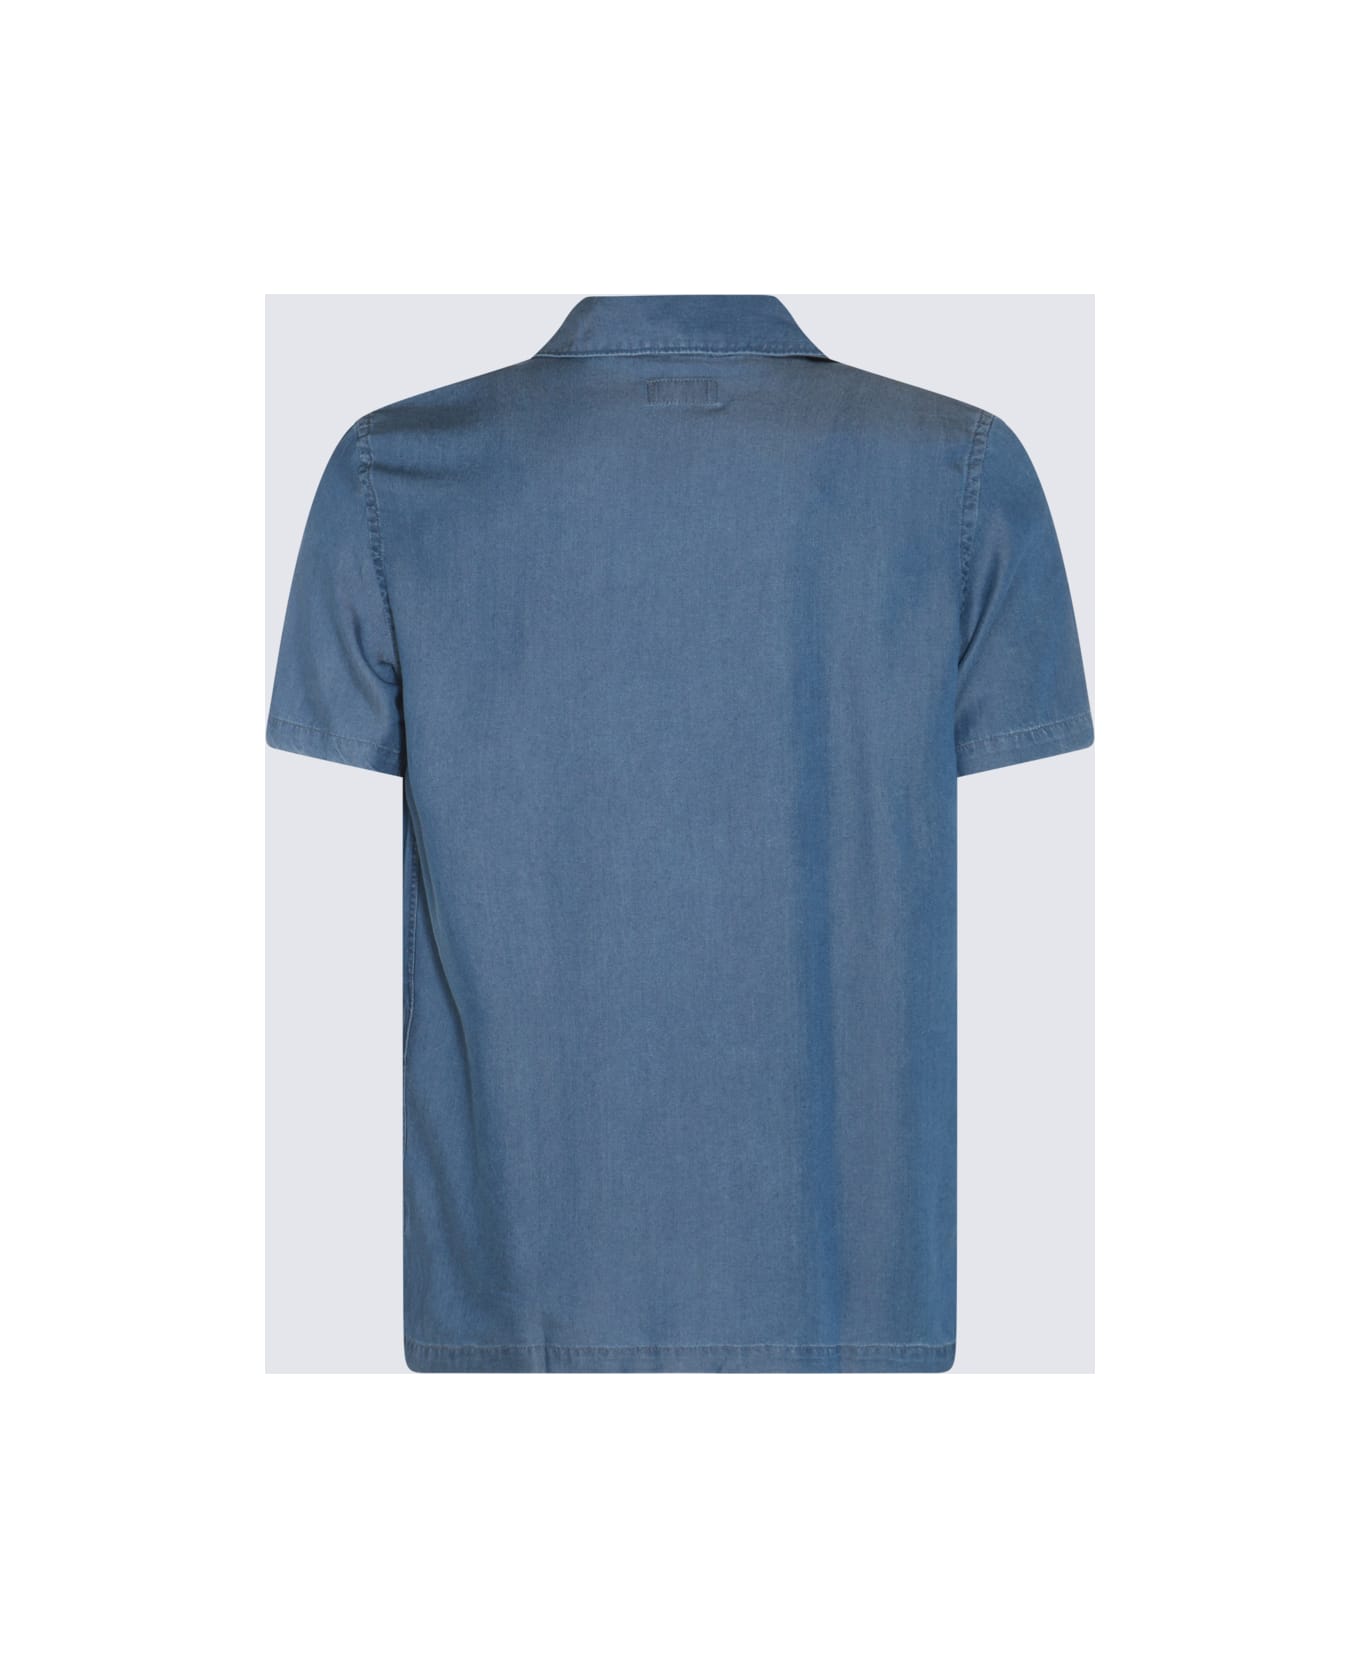 Altea Blue Shirt - Denim